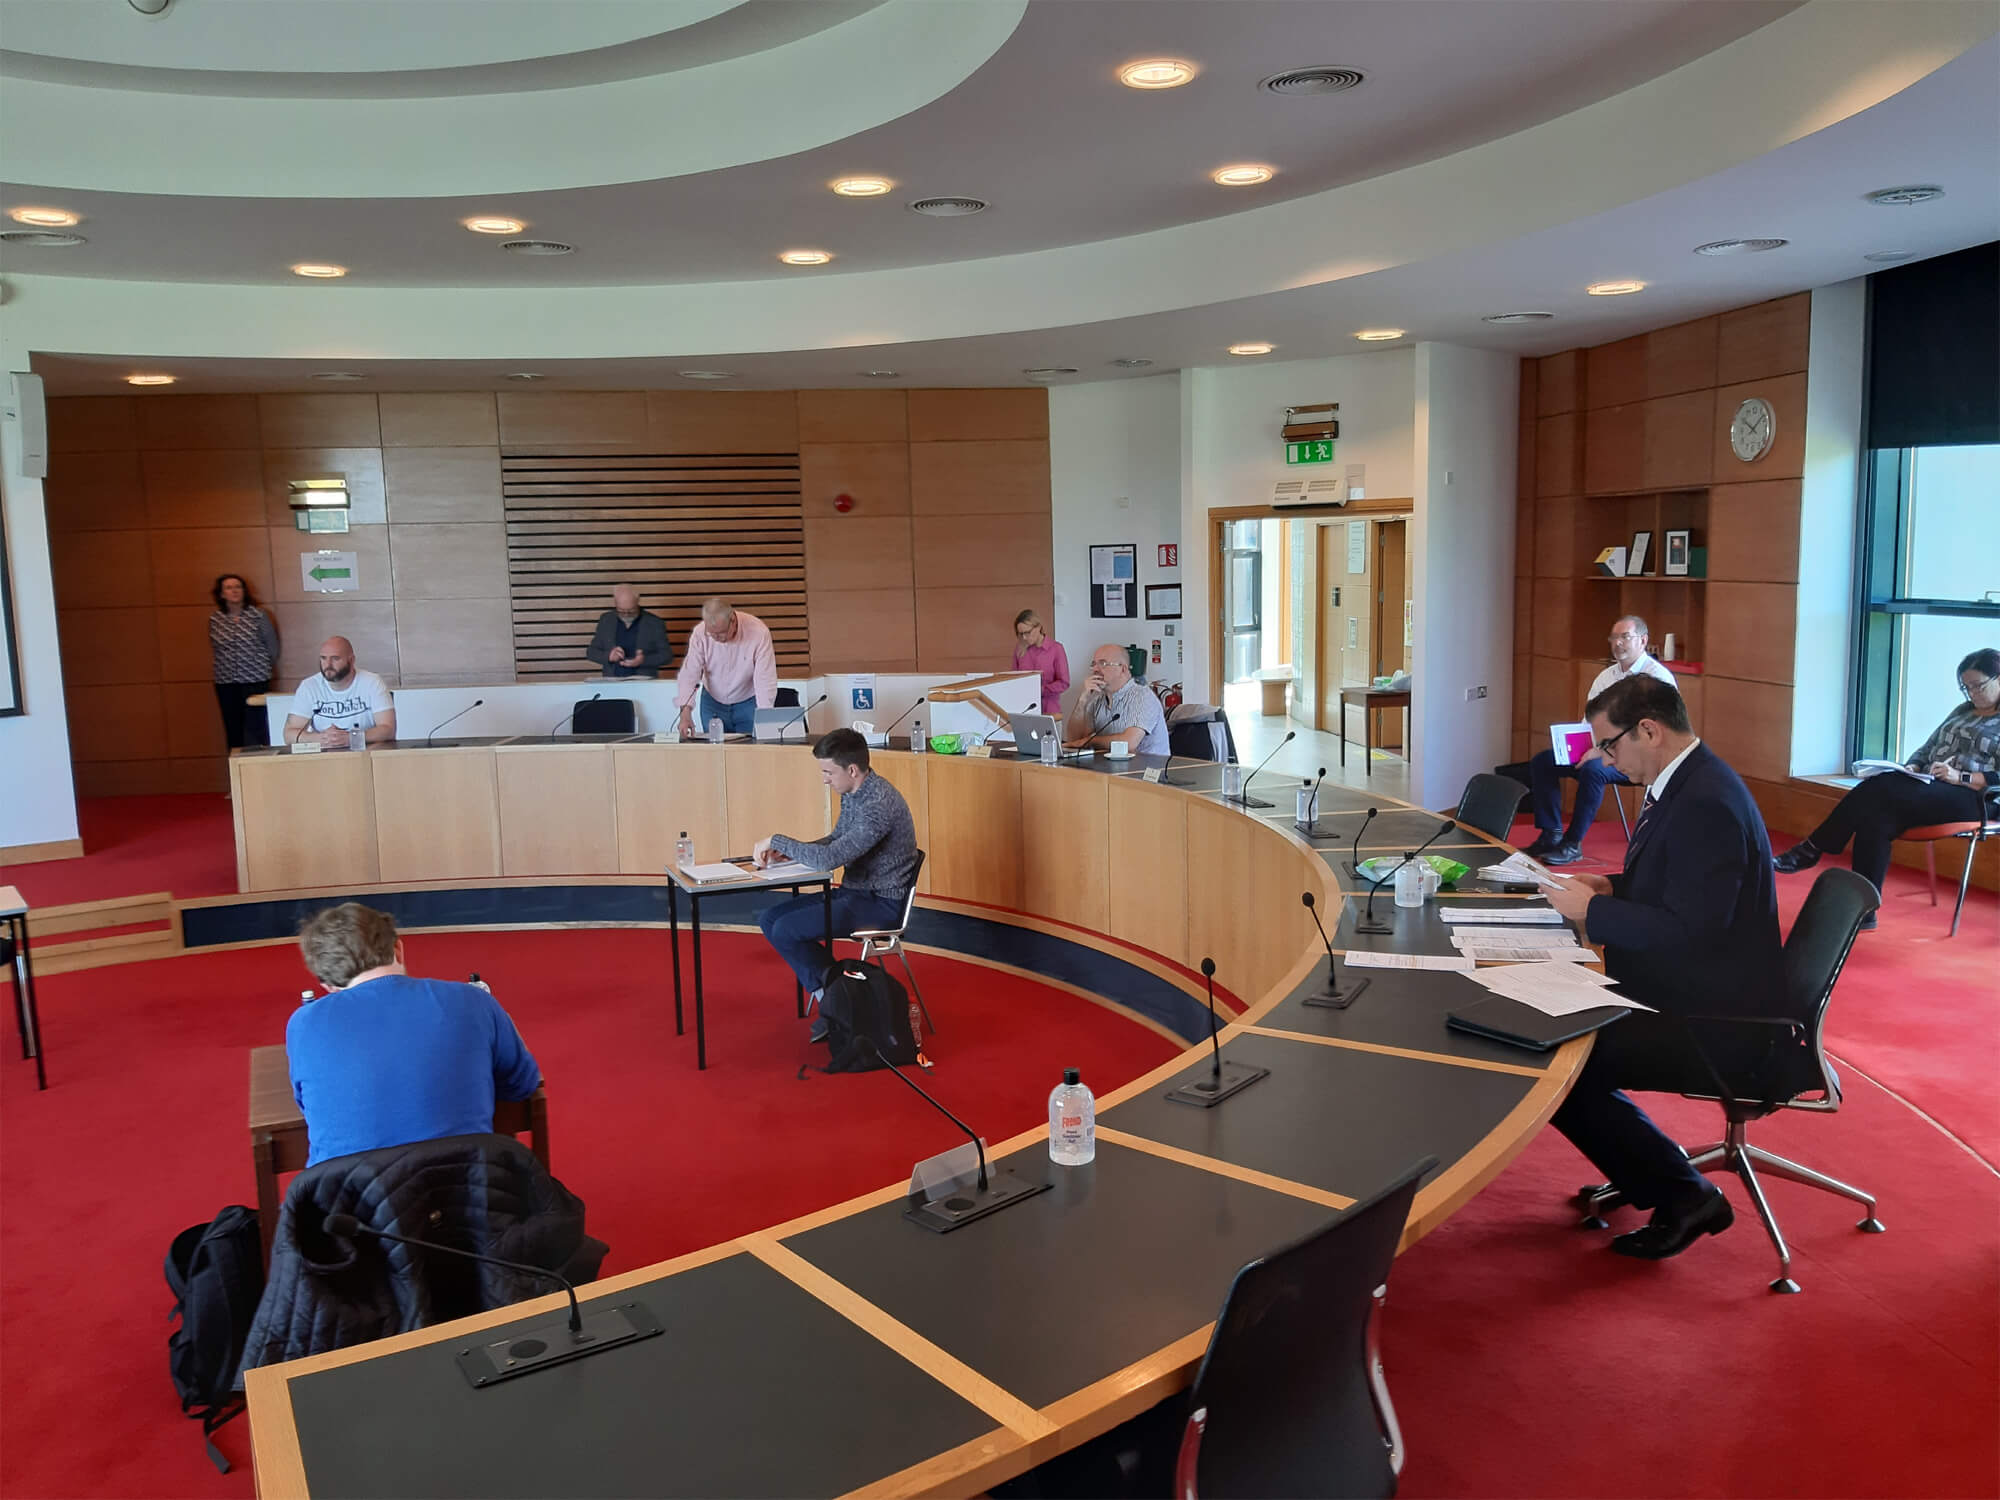 Borough District of Sligo Meeting - 20th July